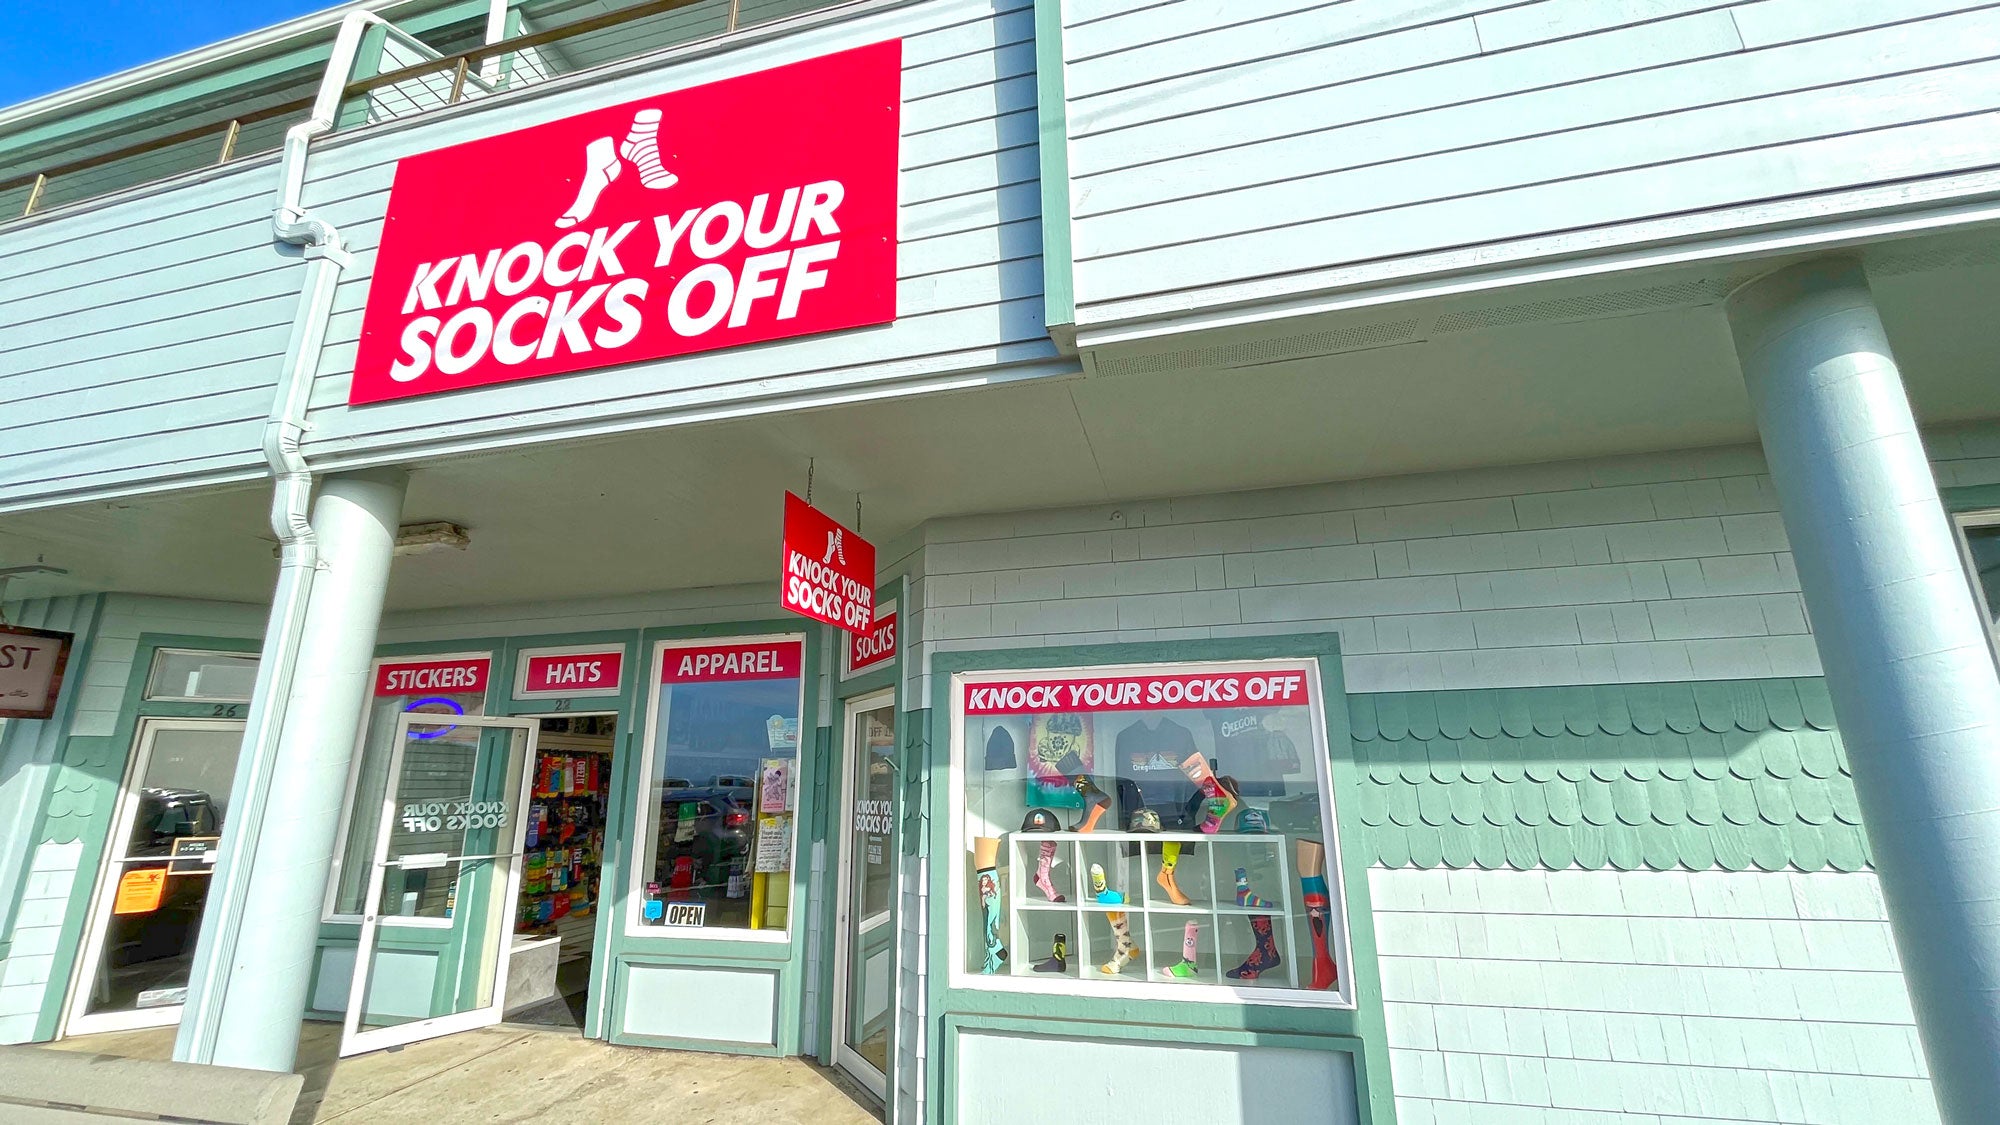 Knock Your Socks Off retail storefront in Depoe Bay, Oregon